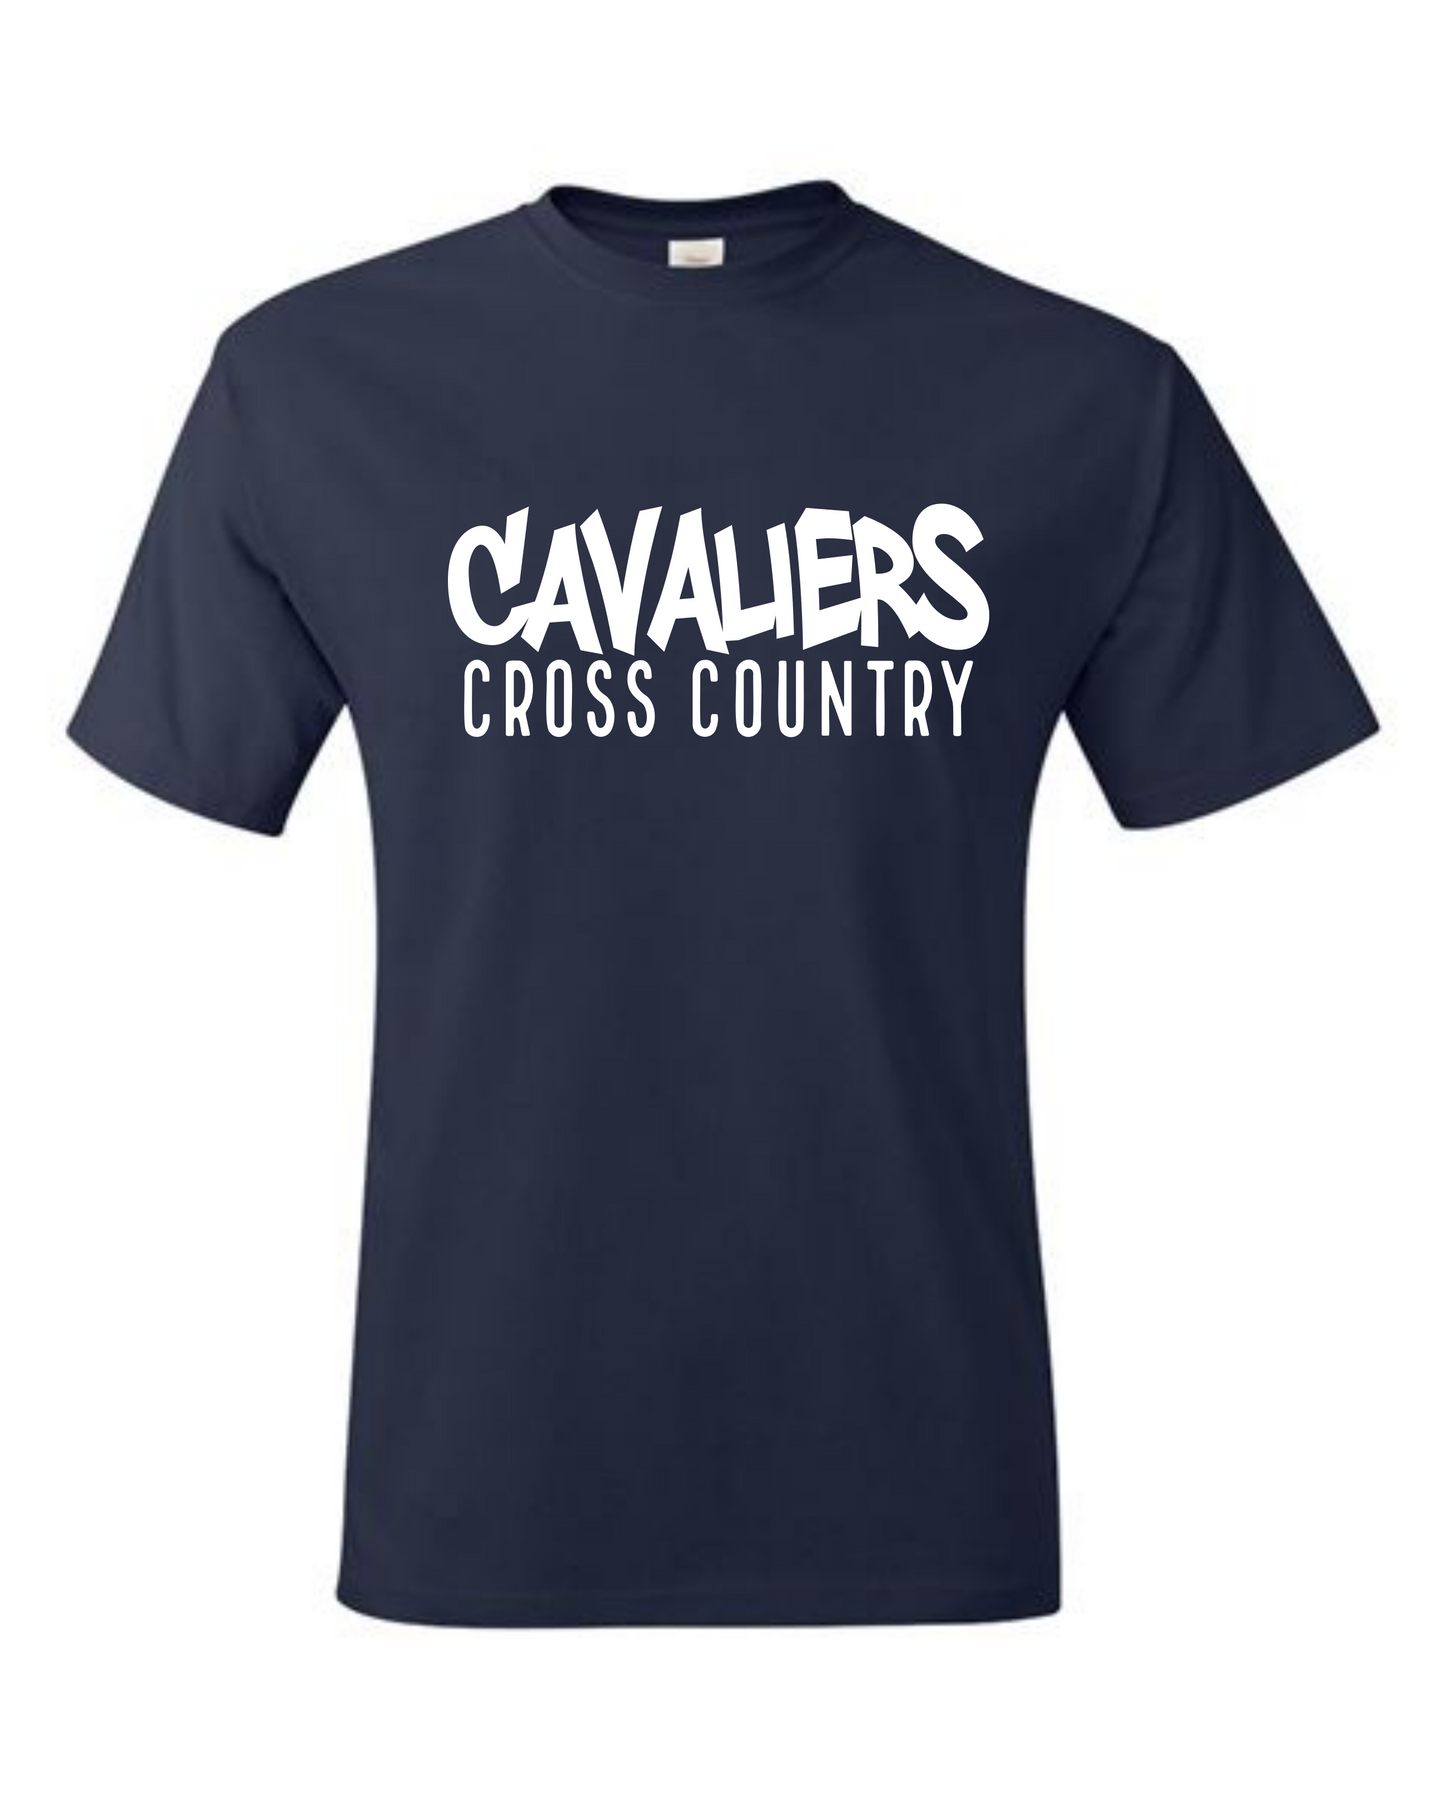 Cavaliers Cross Country Tshirt